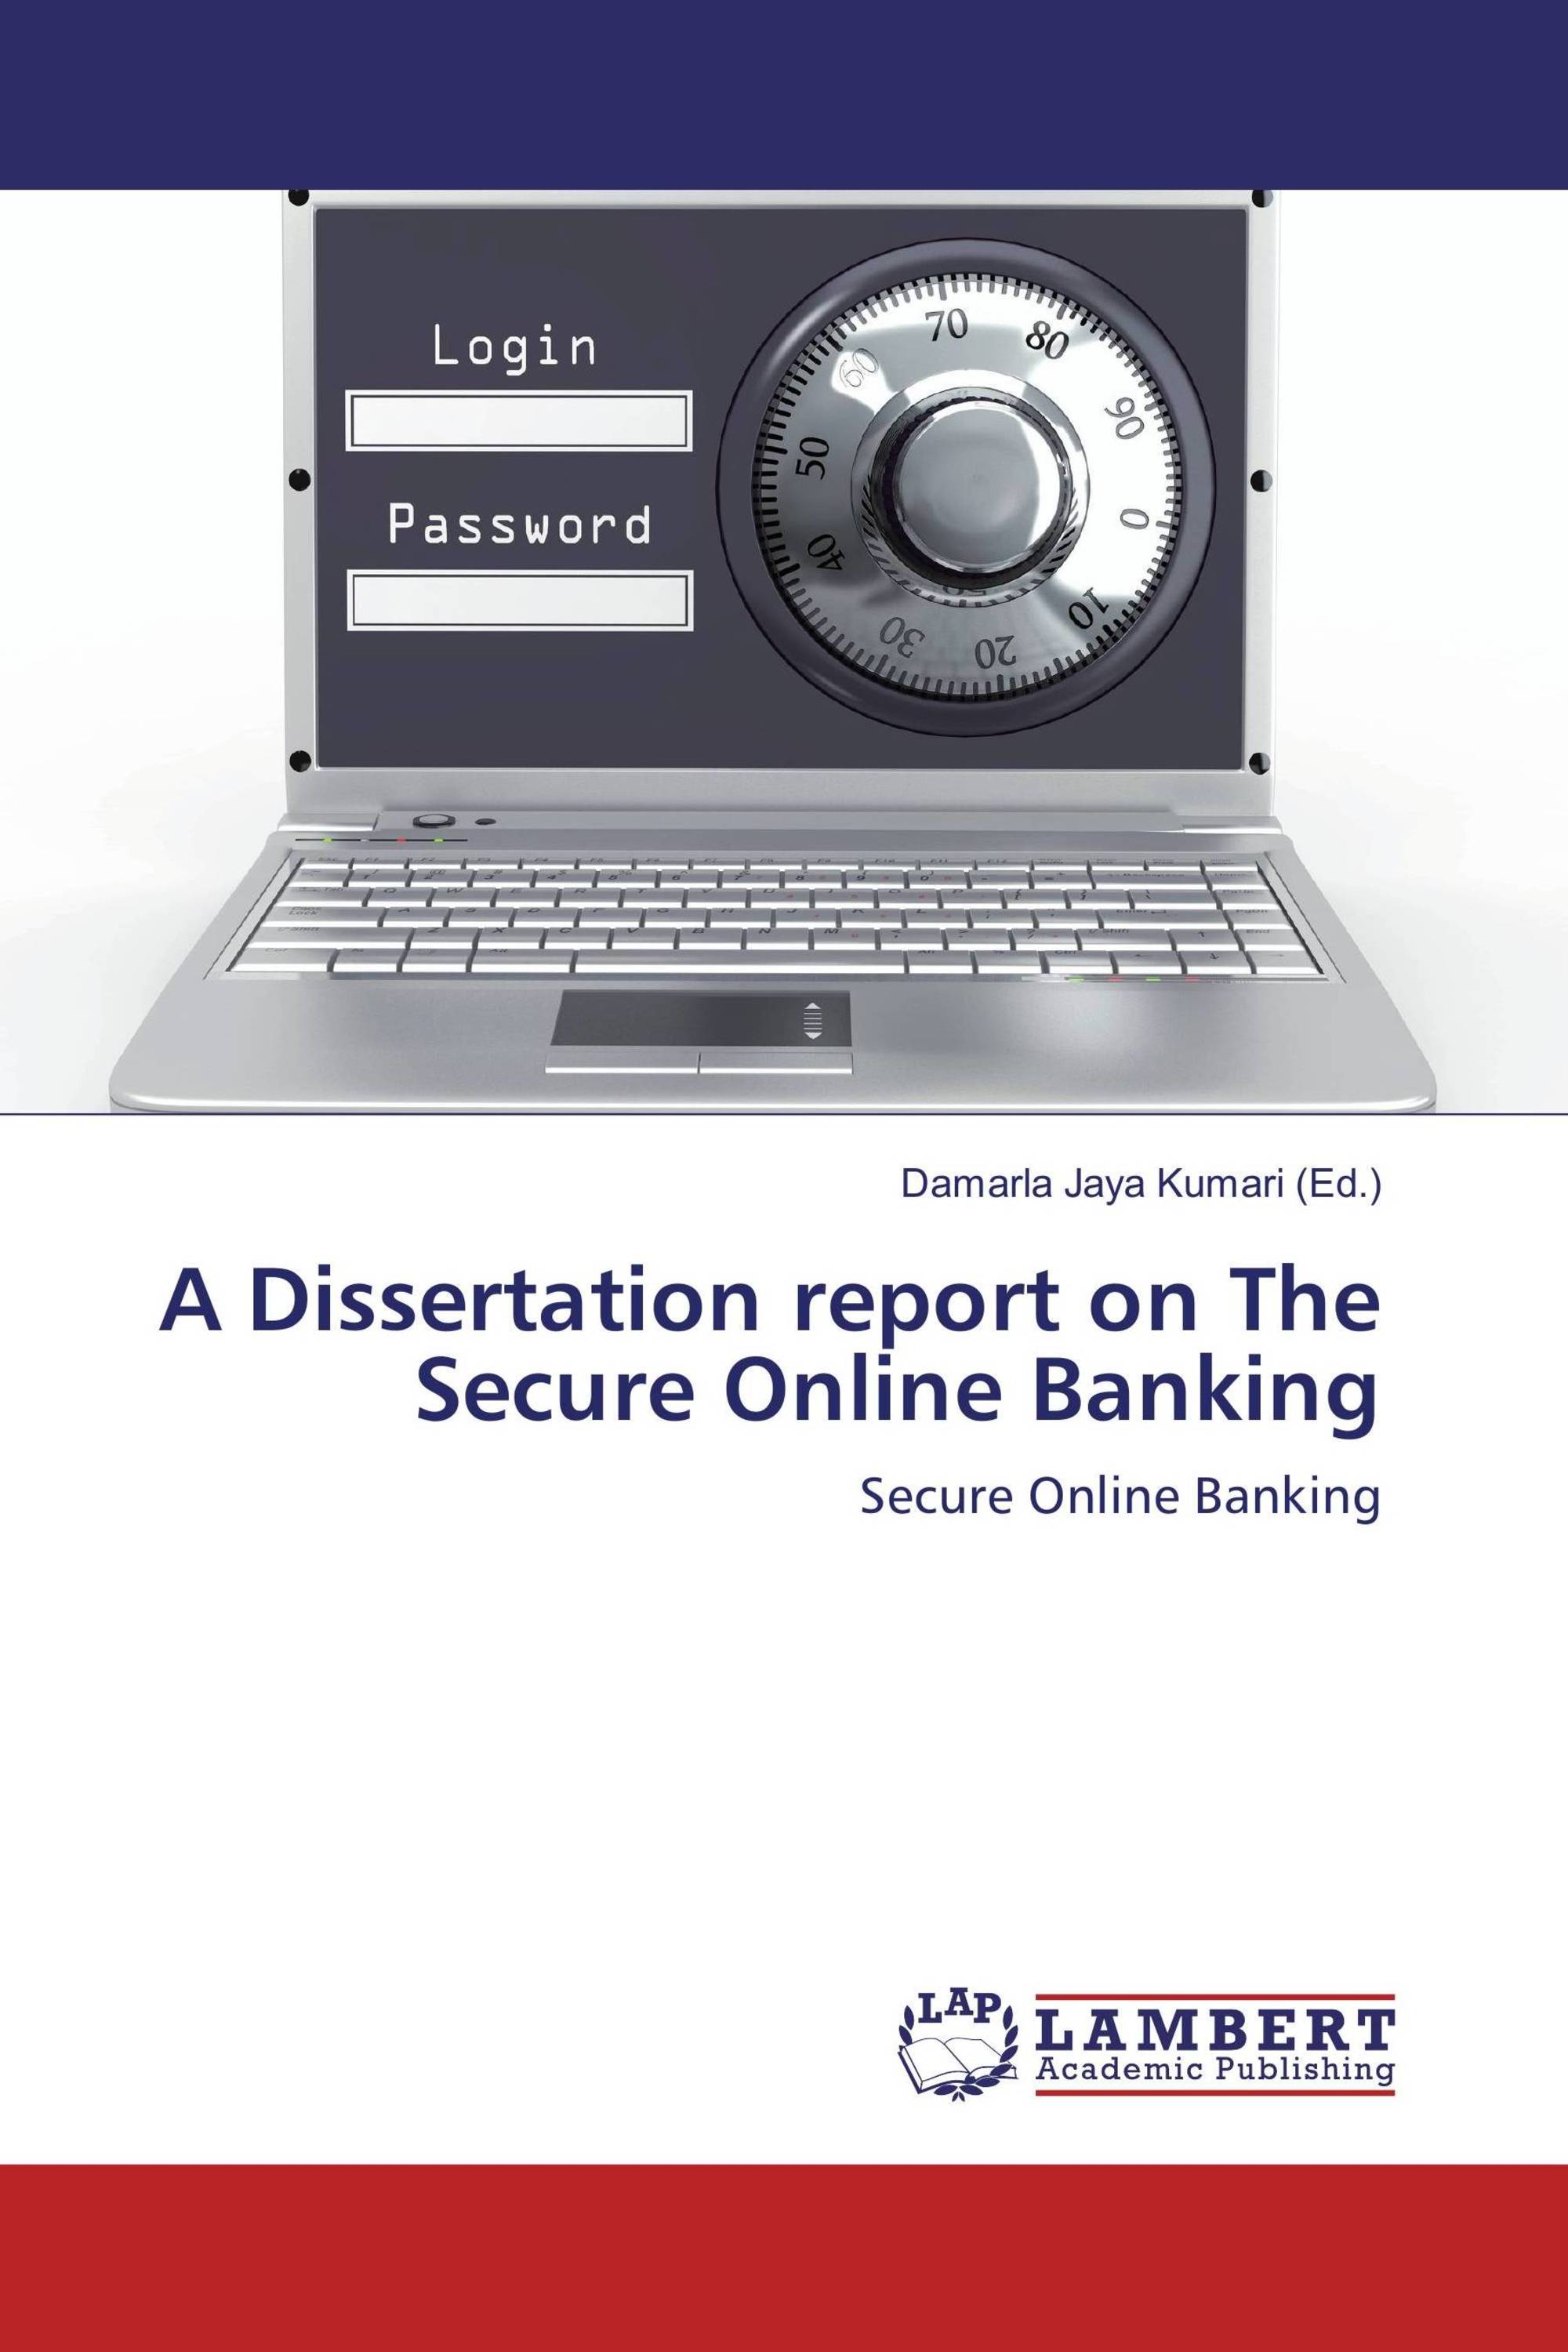 dissertation on e banking